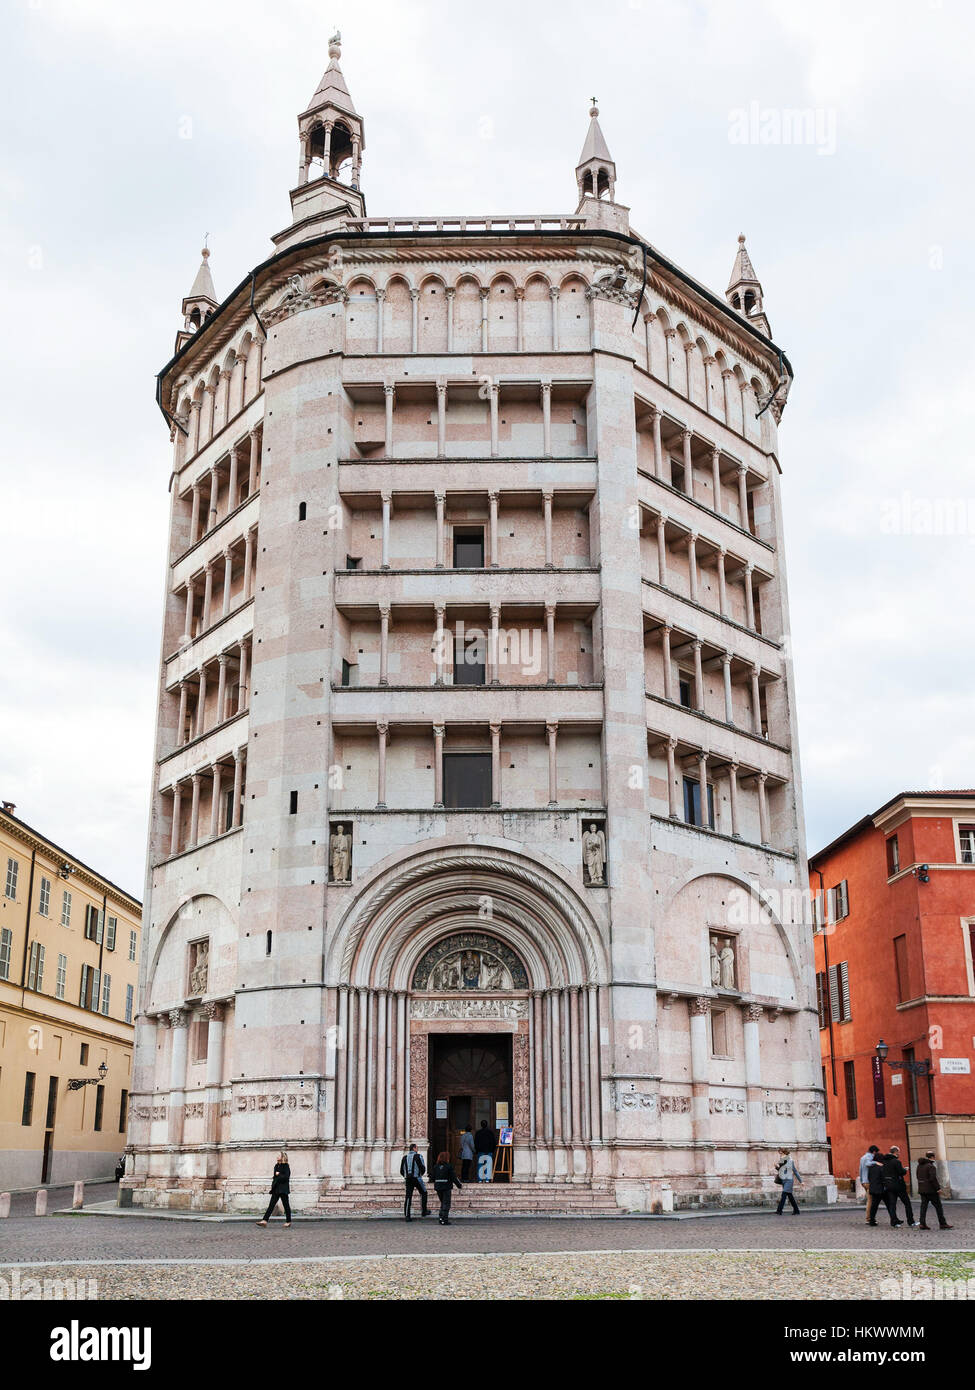 PARMA, Italien - 3. November 2012: Fassade des Baptisterium am Piazza del Duomo in Parma Stadt. Bau des Baptisterium begann 1196 von Antelami. Stockfoto